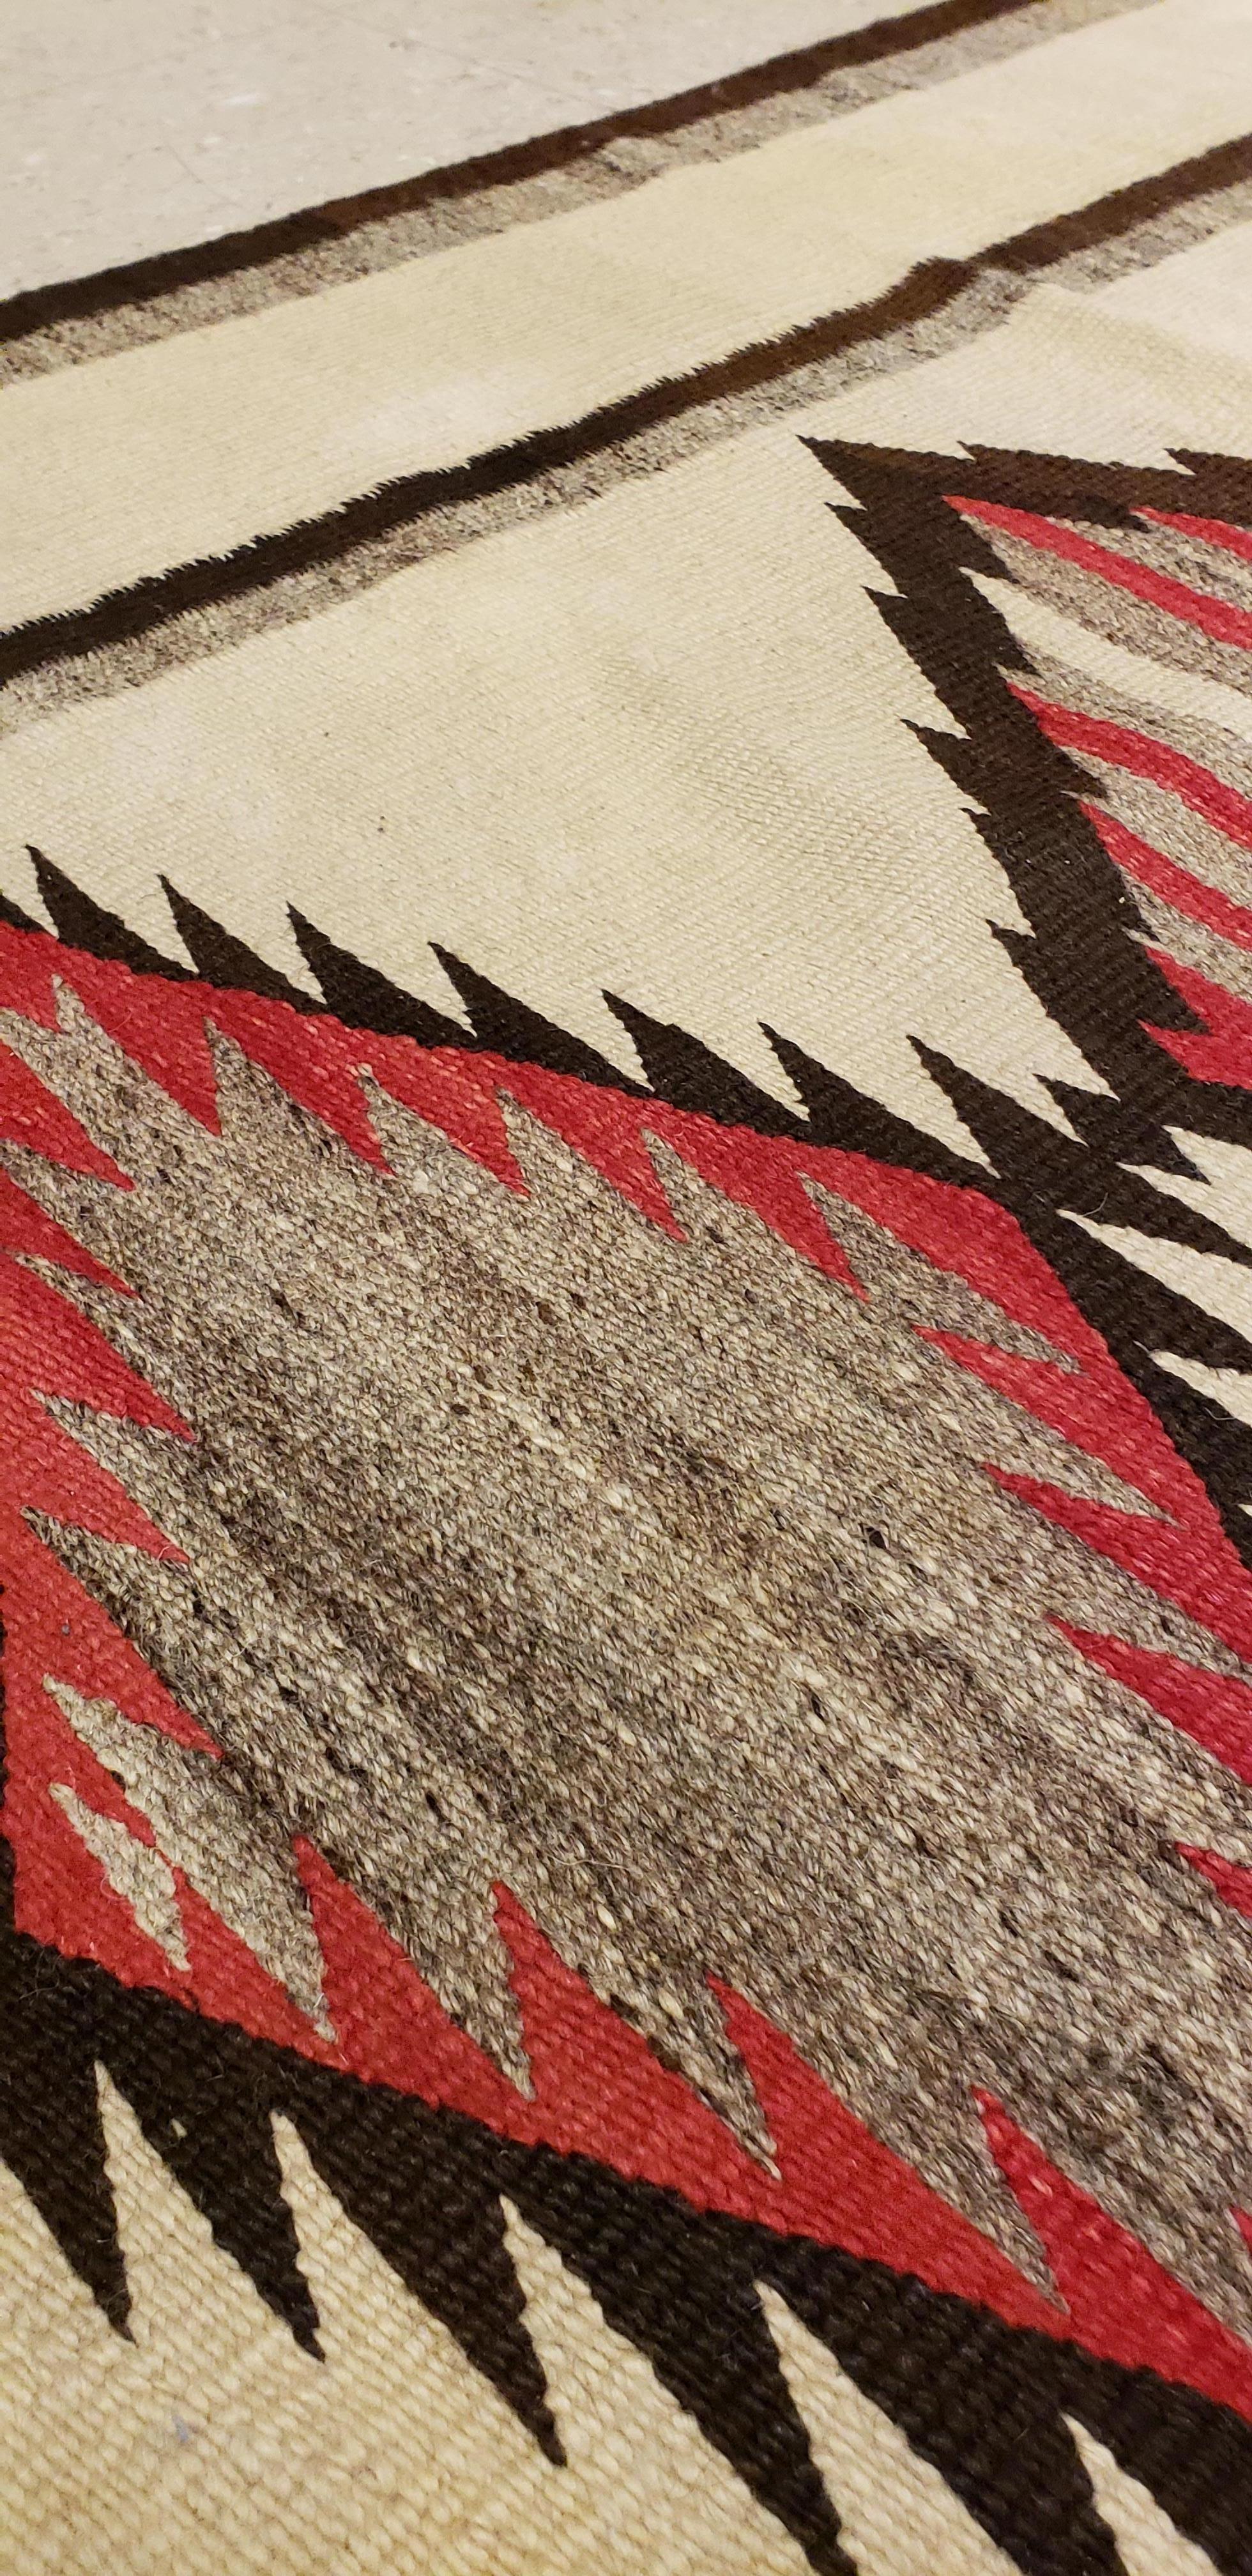 Early 20th Century Antique Navajo Rug, Handmade Wool Oriental Rug, Red, Beige and Brown